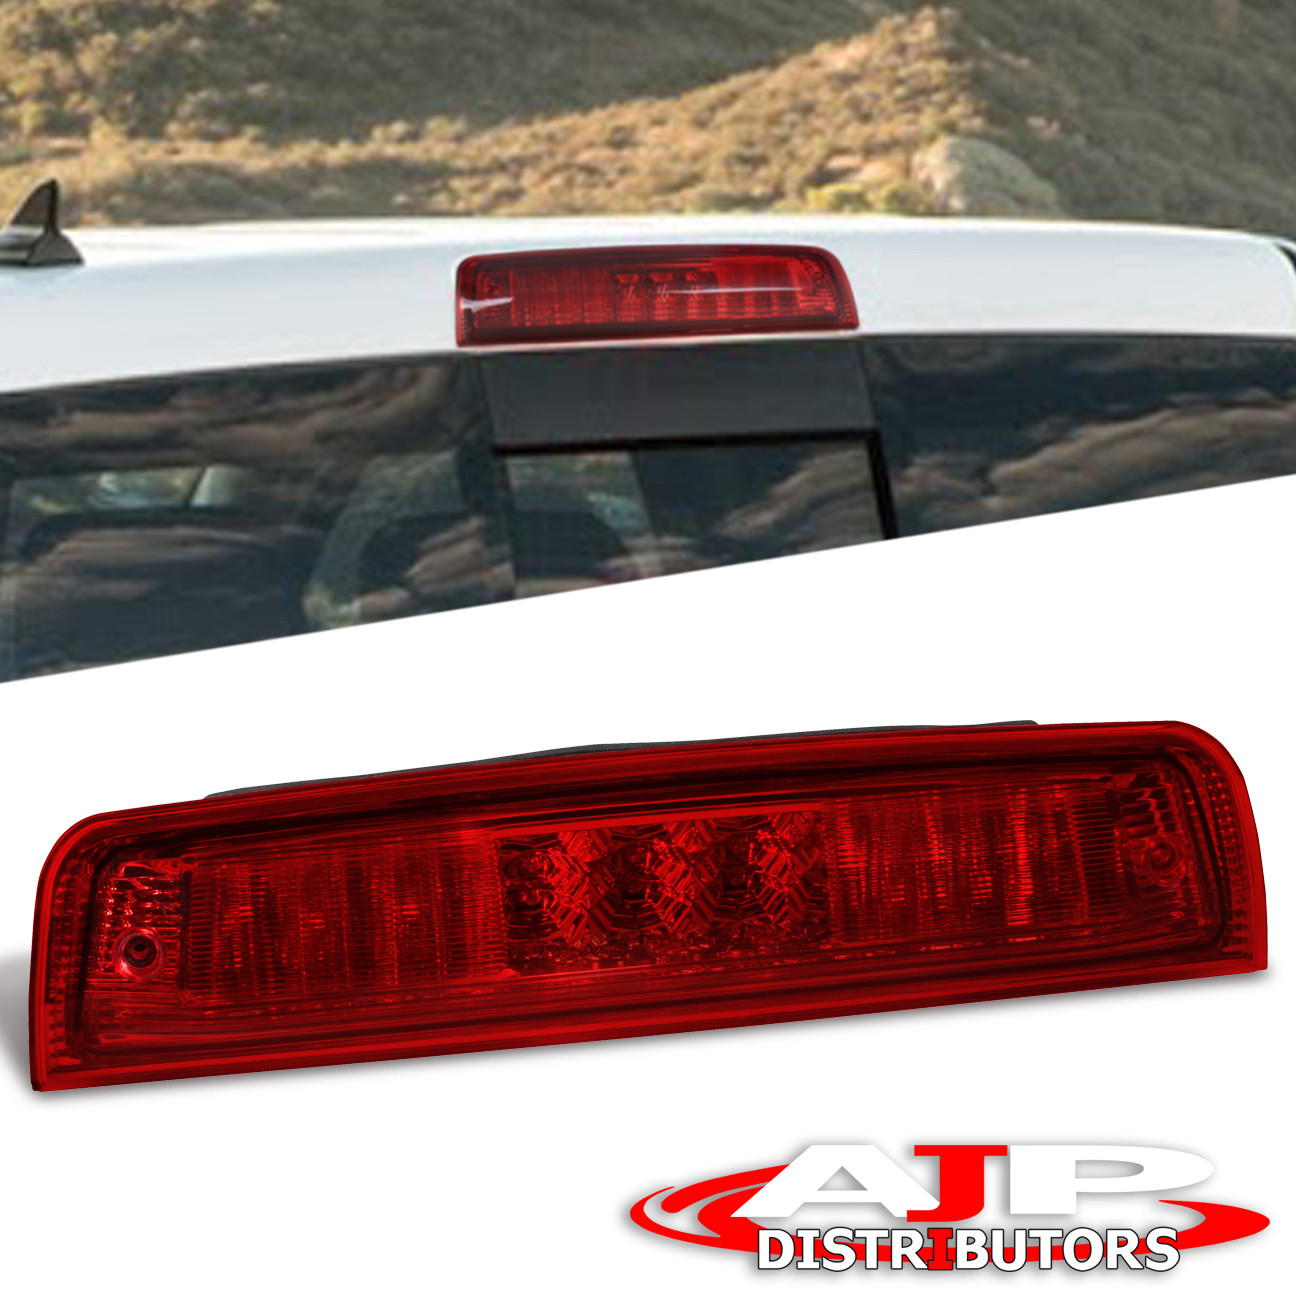 Red LED Rear Cargo Third Brake Lights Stop Lamps For 2009-2019 Dodge Ram 1500 | eBay 2019 Ram 1500 Led Third Brake Light